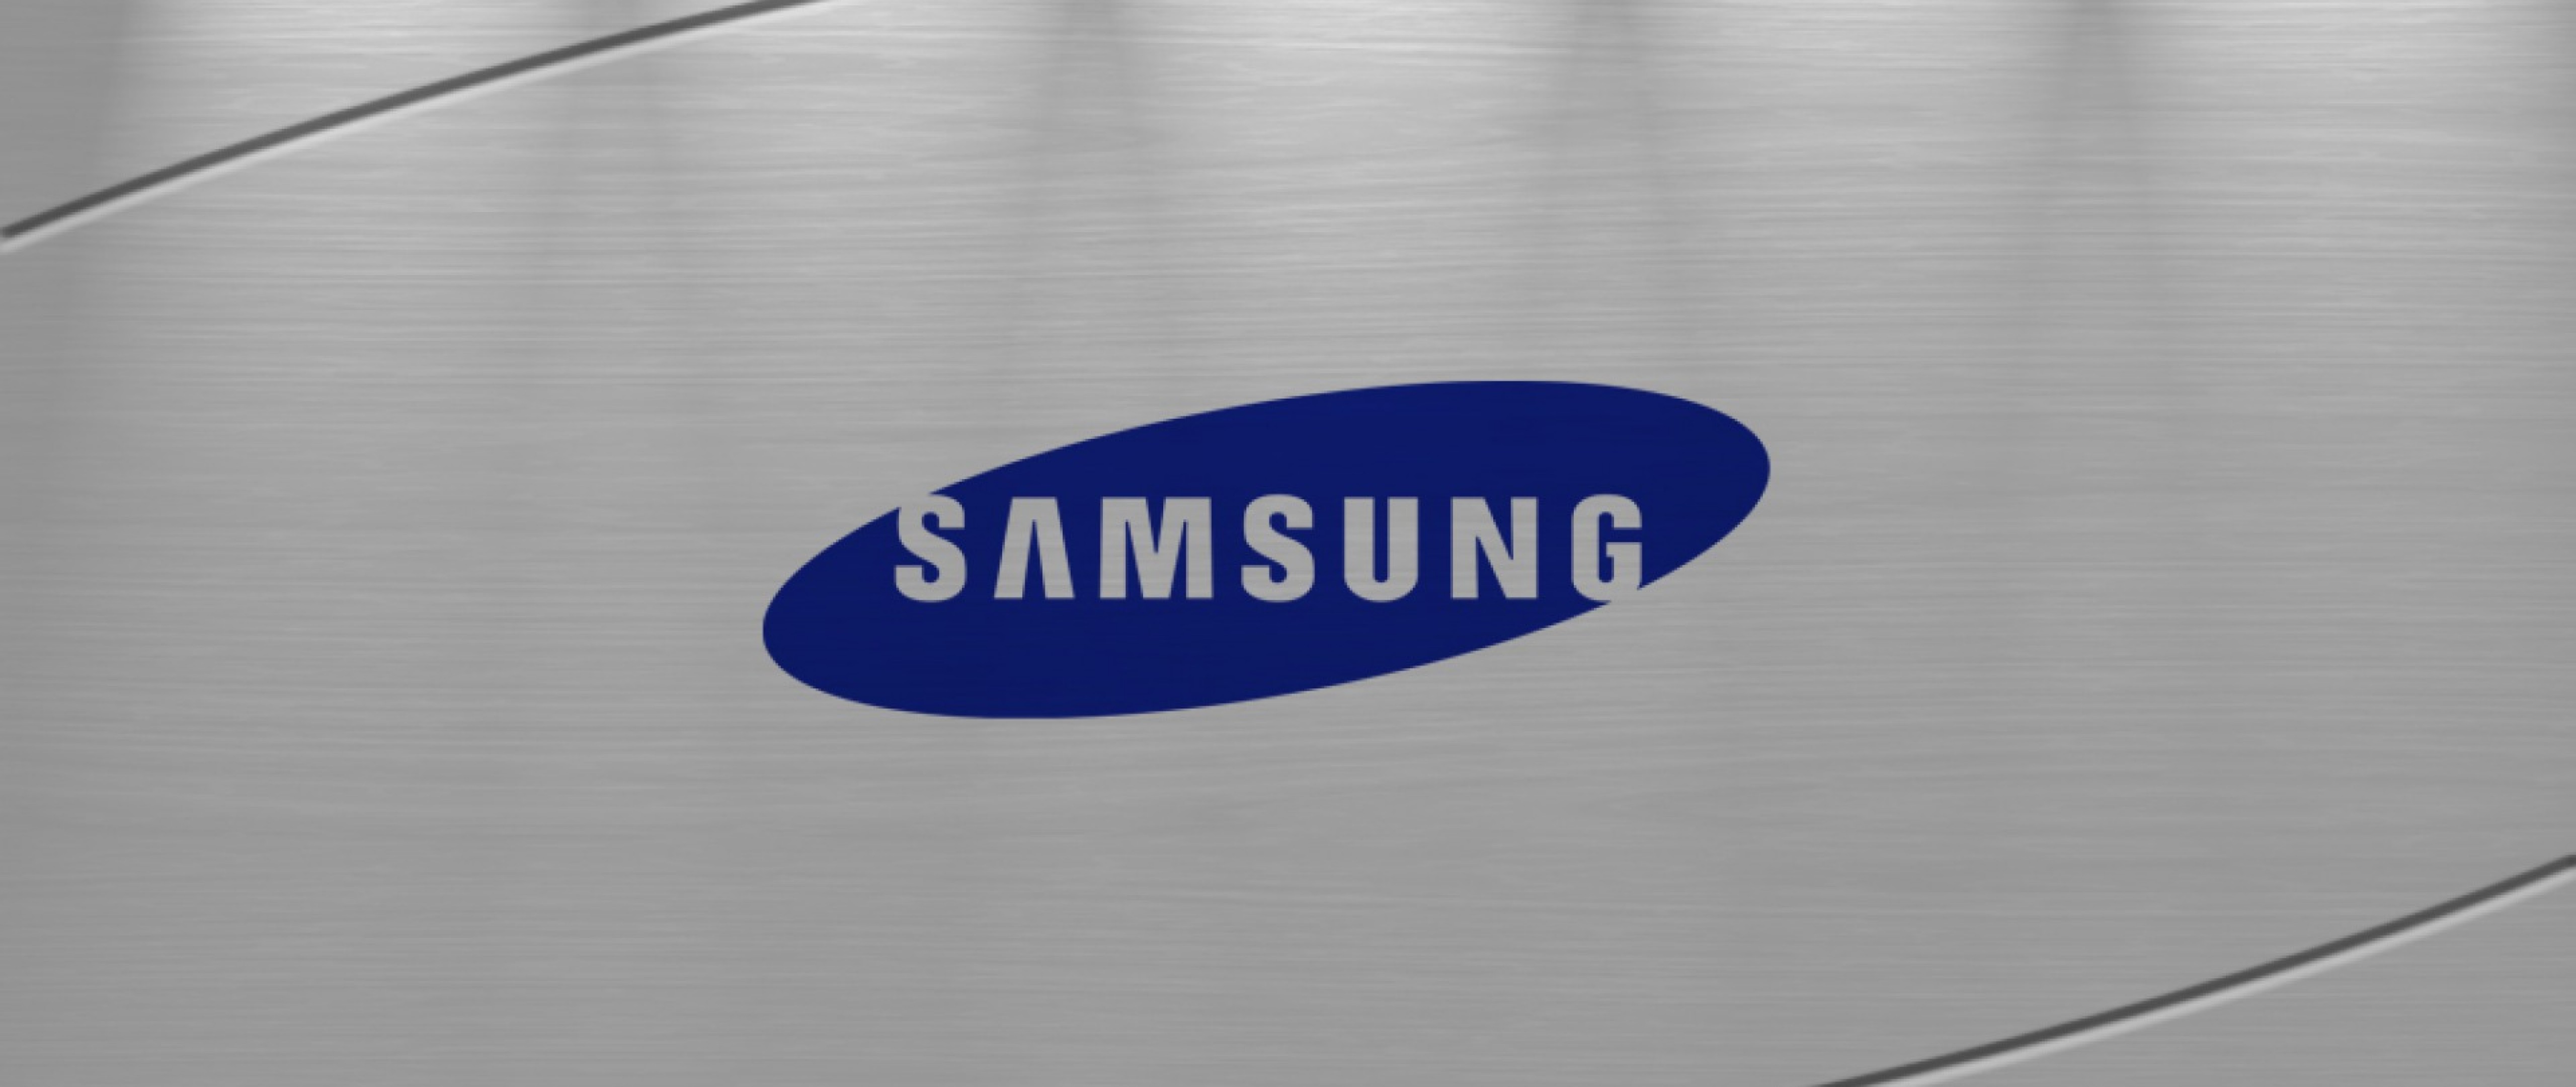 Samsung HD Wallpaper